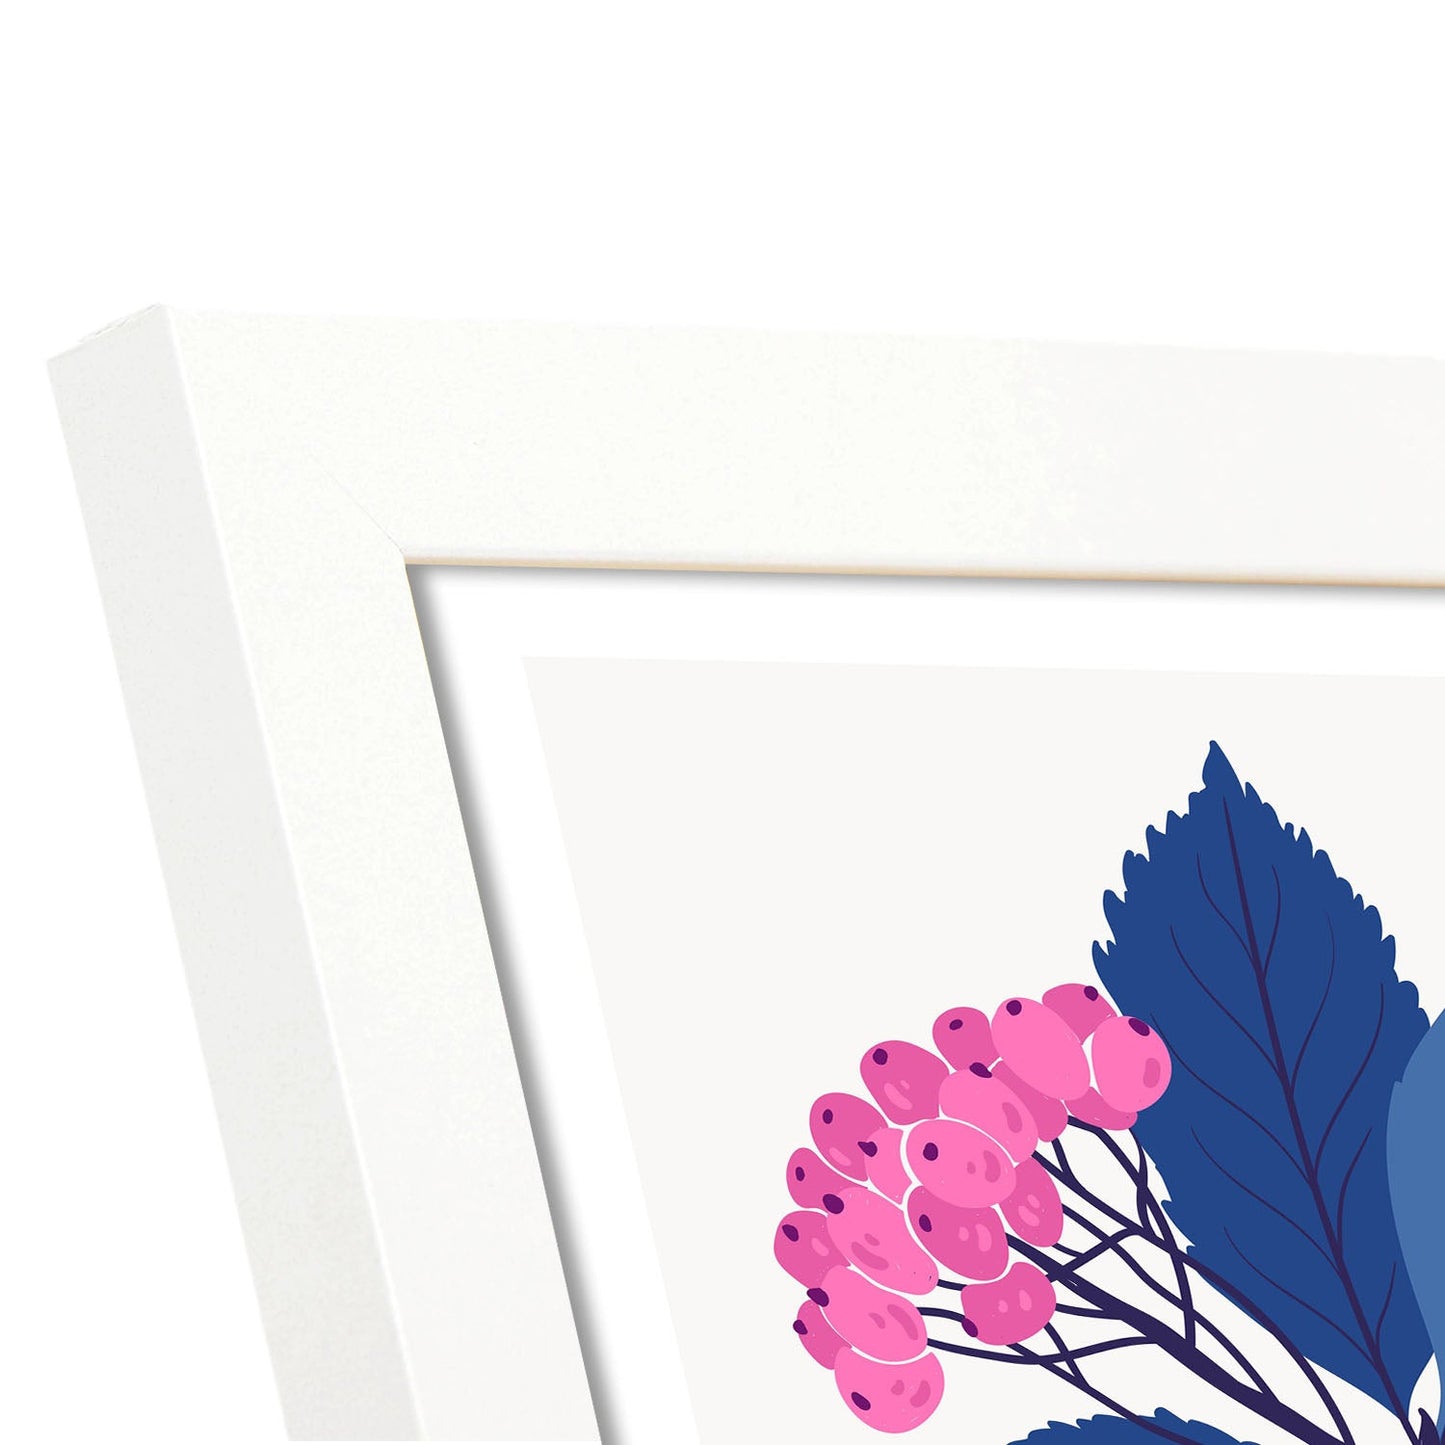 Pink Flowers Blue Leaves-Artwork-Nacnic-Nacnic Estudio SL